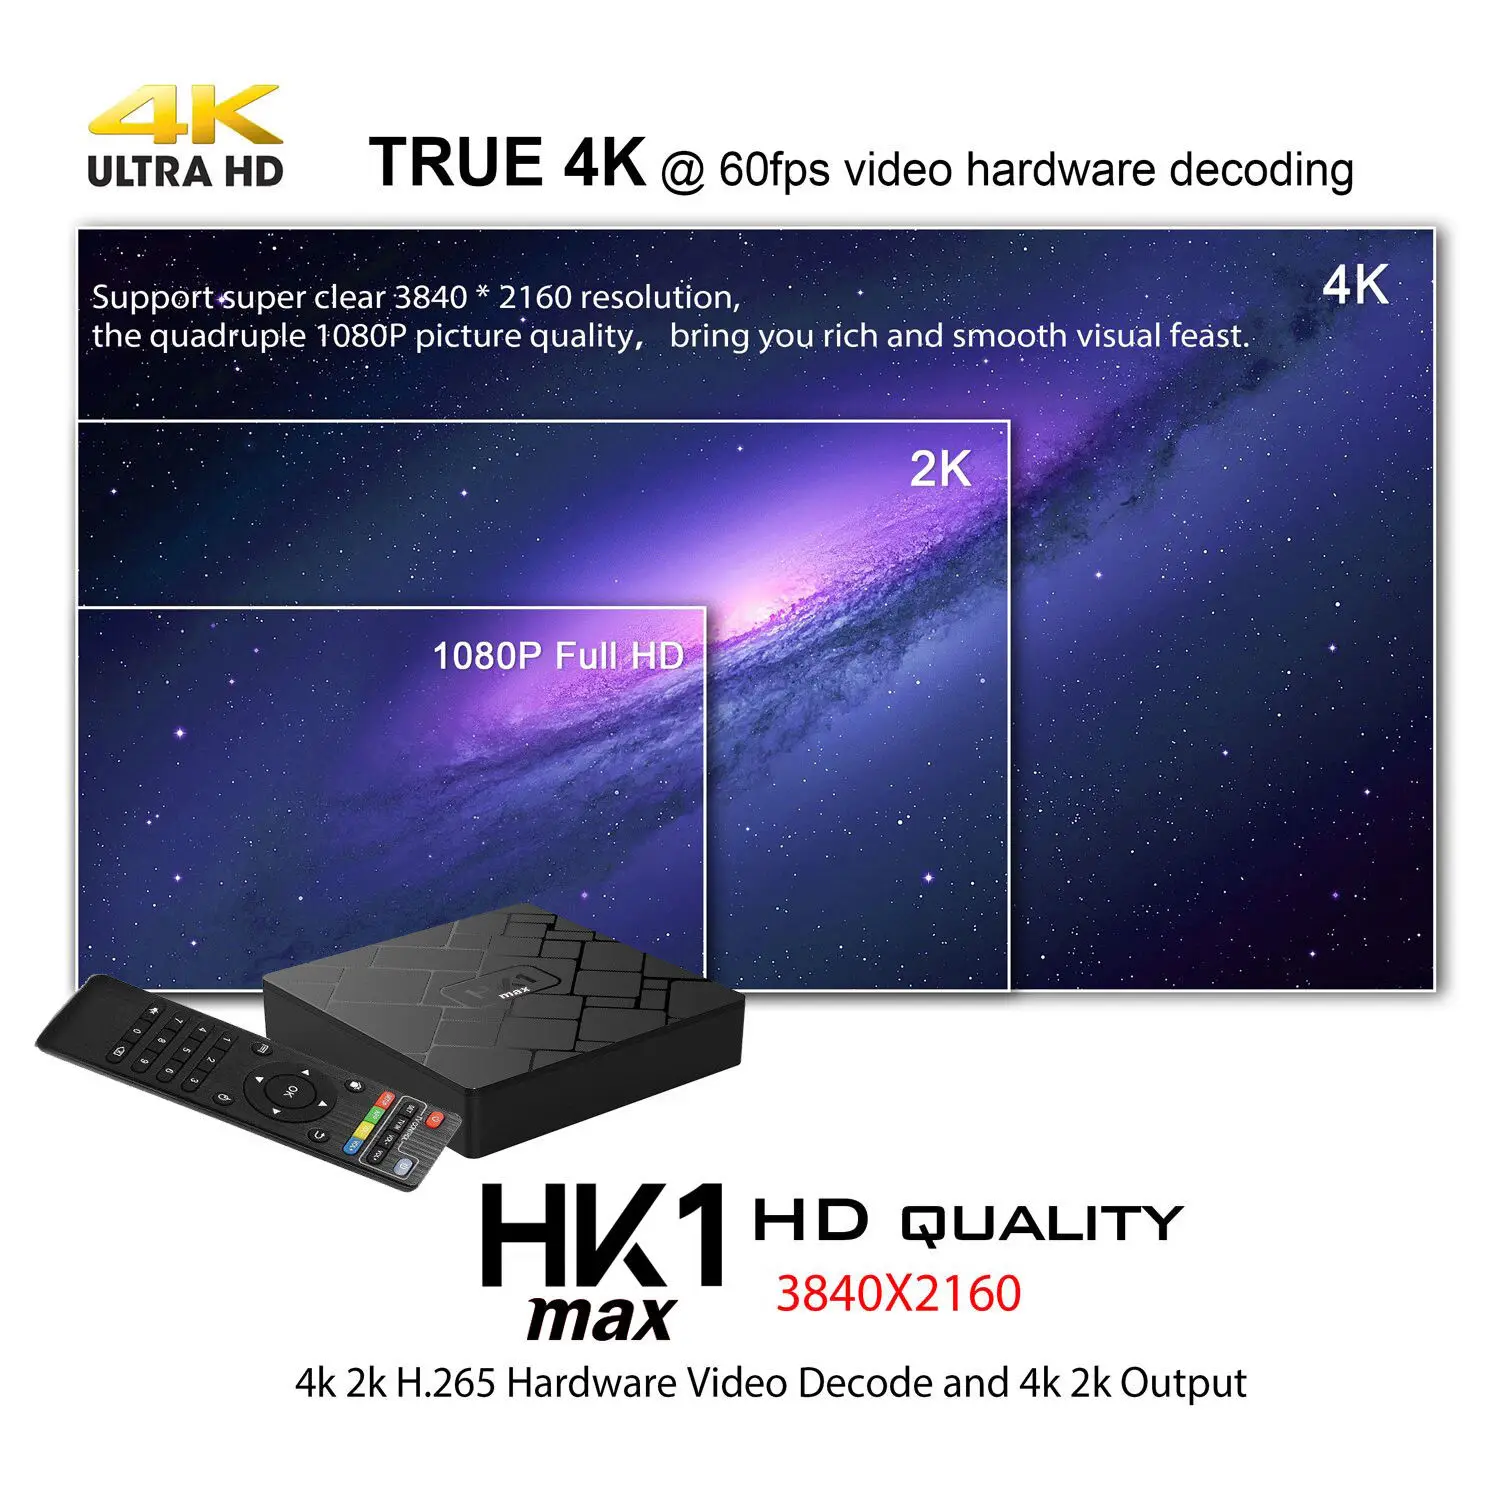 HK1MAX Android 8.1.0 Smart ТВ коробка RK3328 4 ядра 64 бита 4 ядра 4G Оперативная память 32 ГБ/64 ГБ Встроенная память 4 K 3D 2,4G Wi-Fi USB3.0